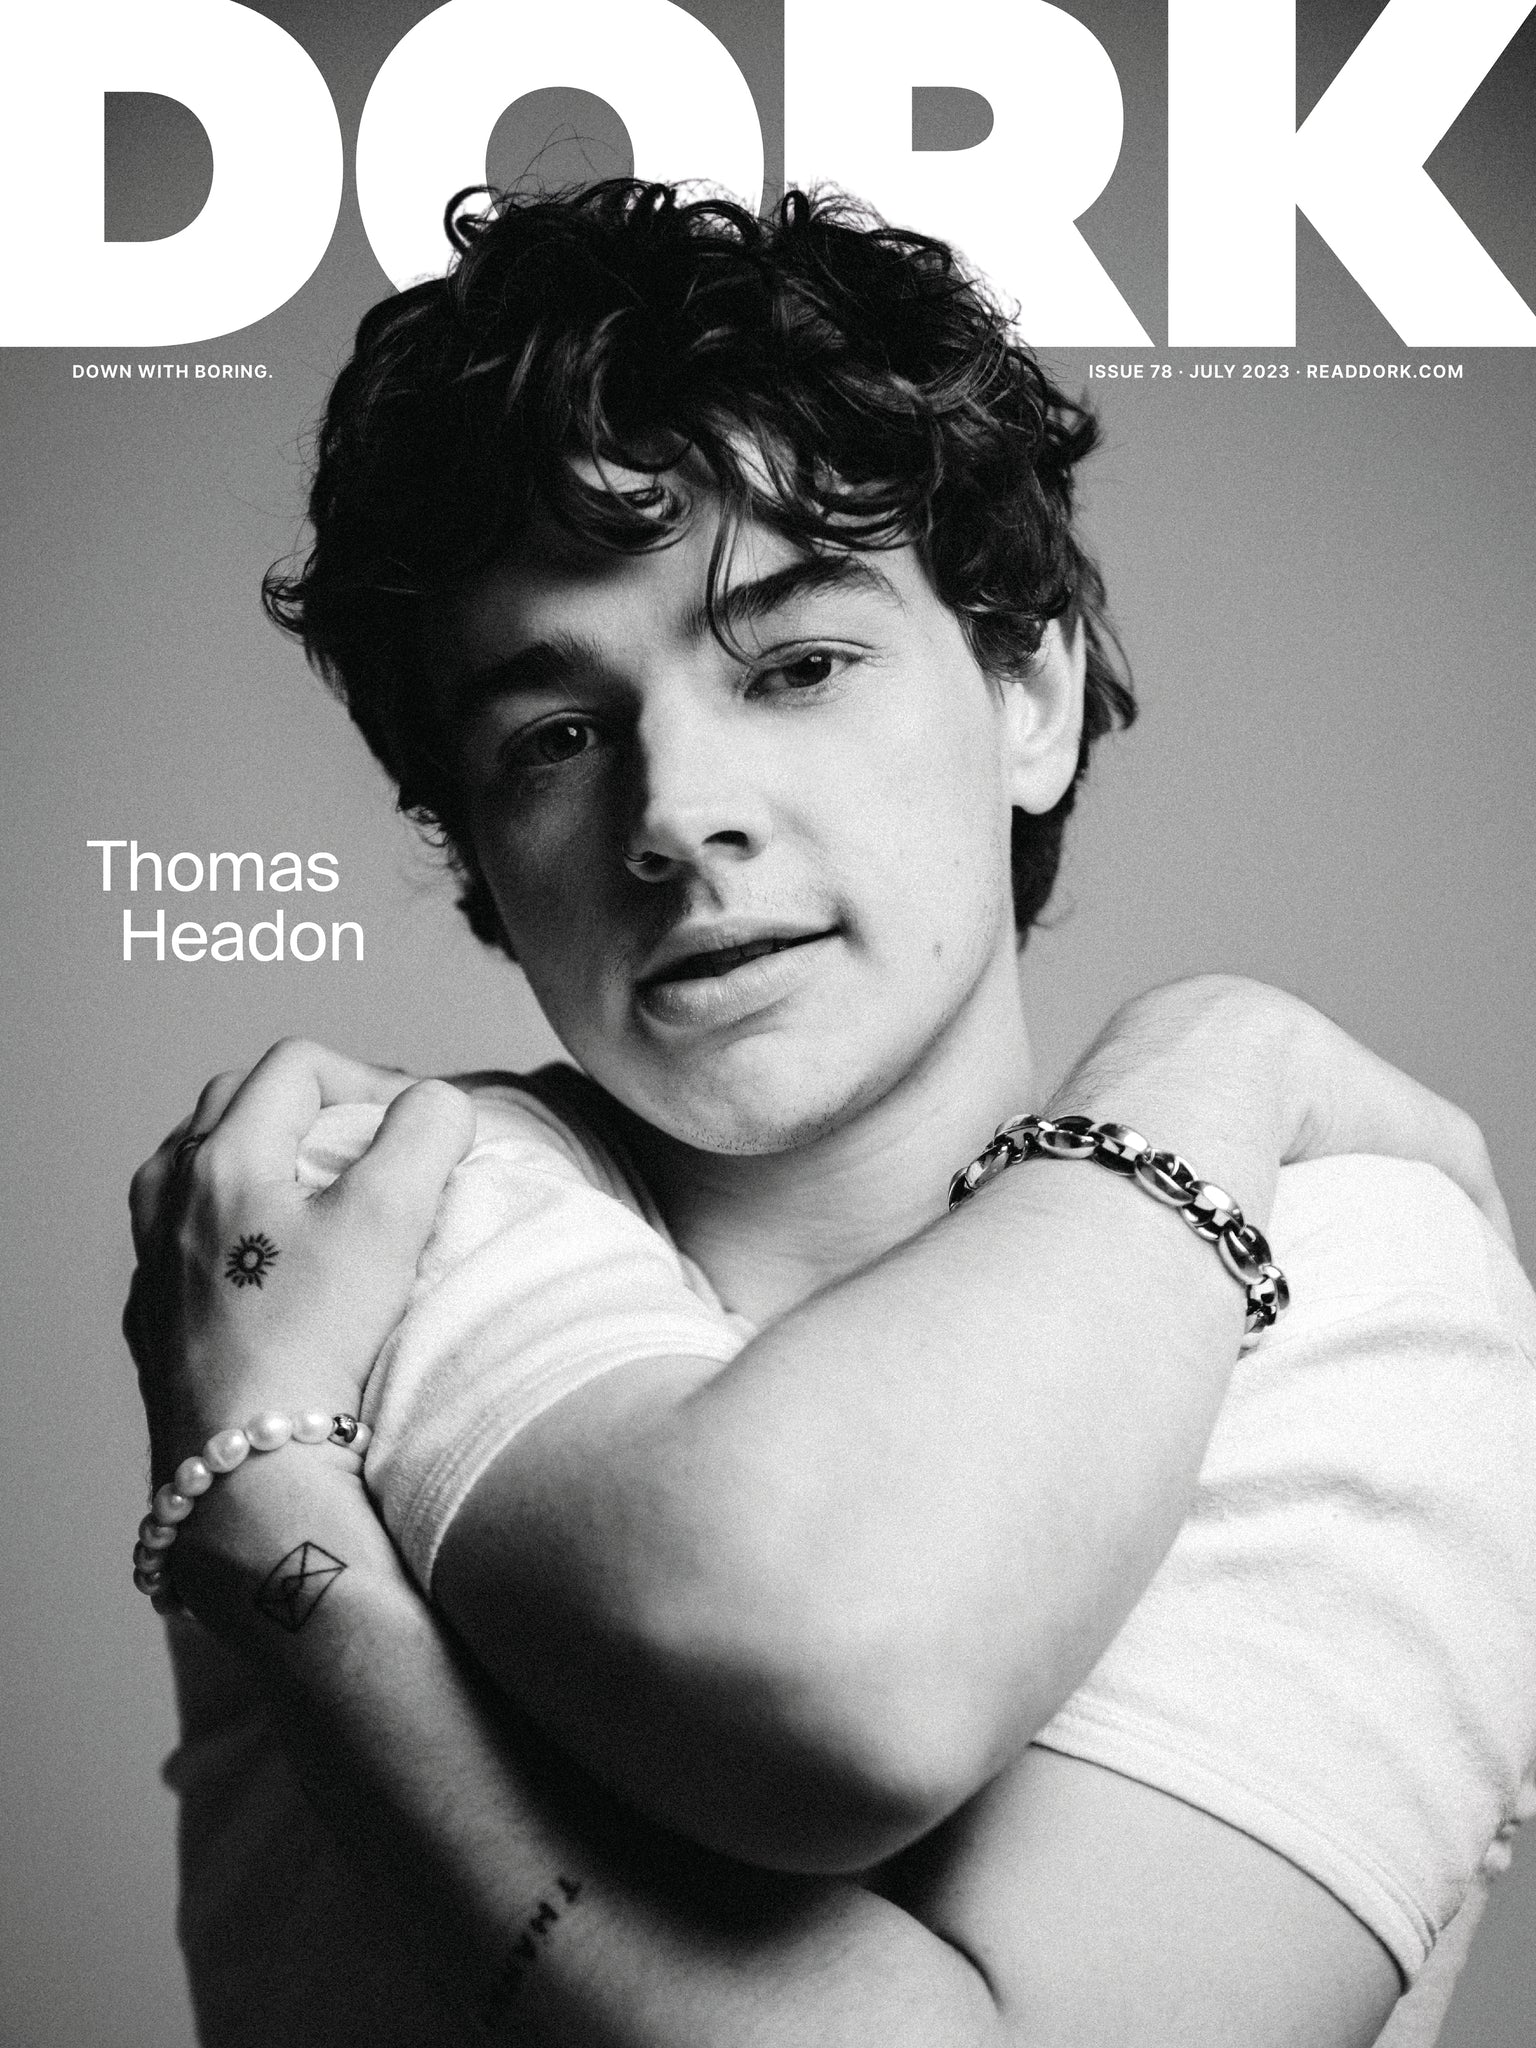 Dork, July 2023 (Thomas Headon cover)